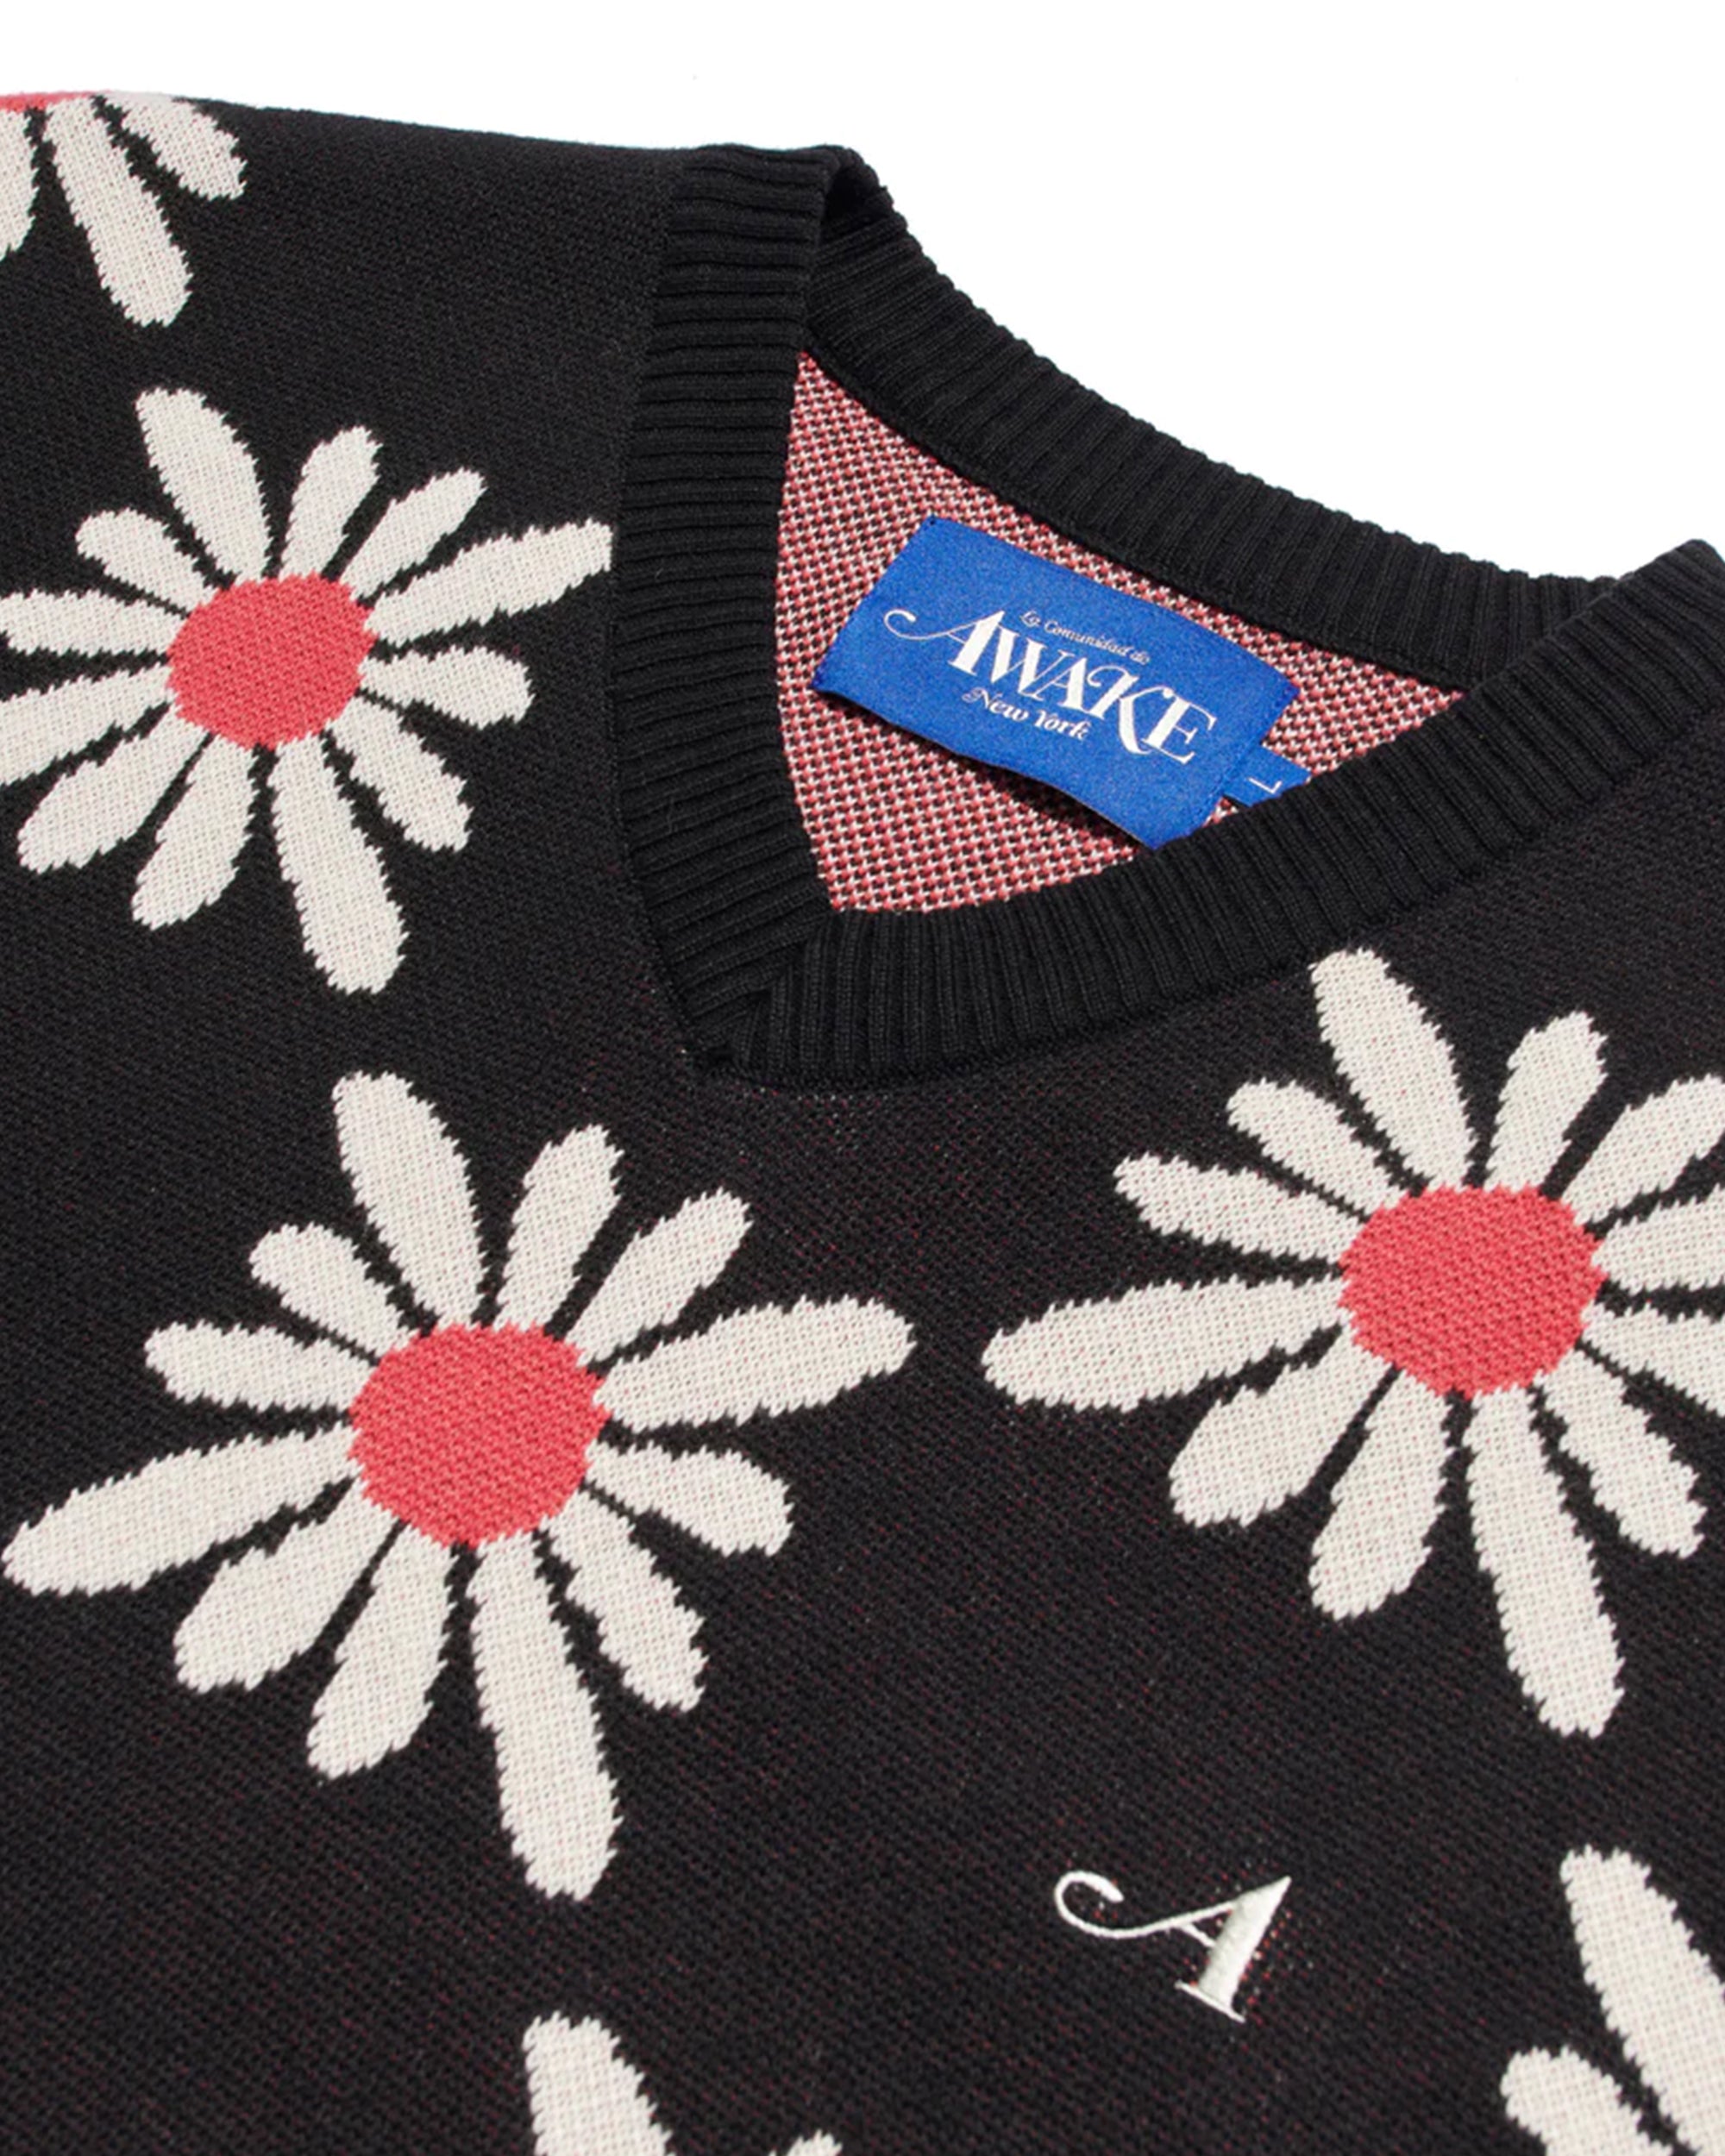 Checkered Floral Sweater Vest - Black